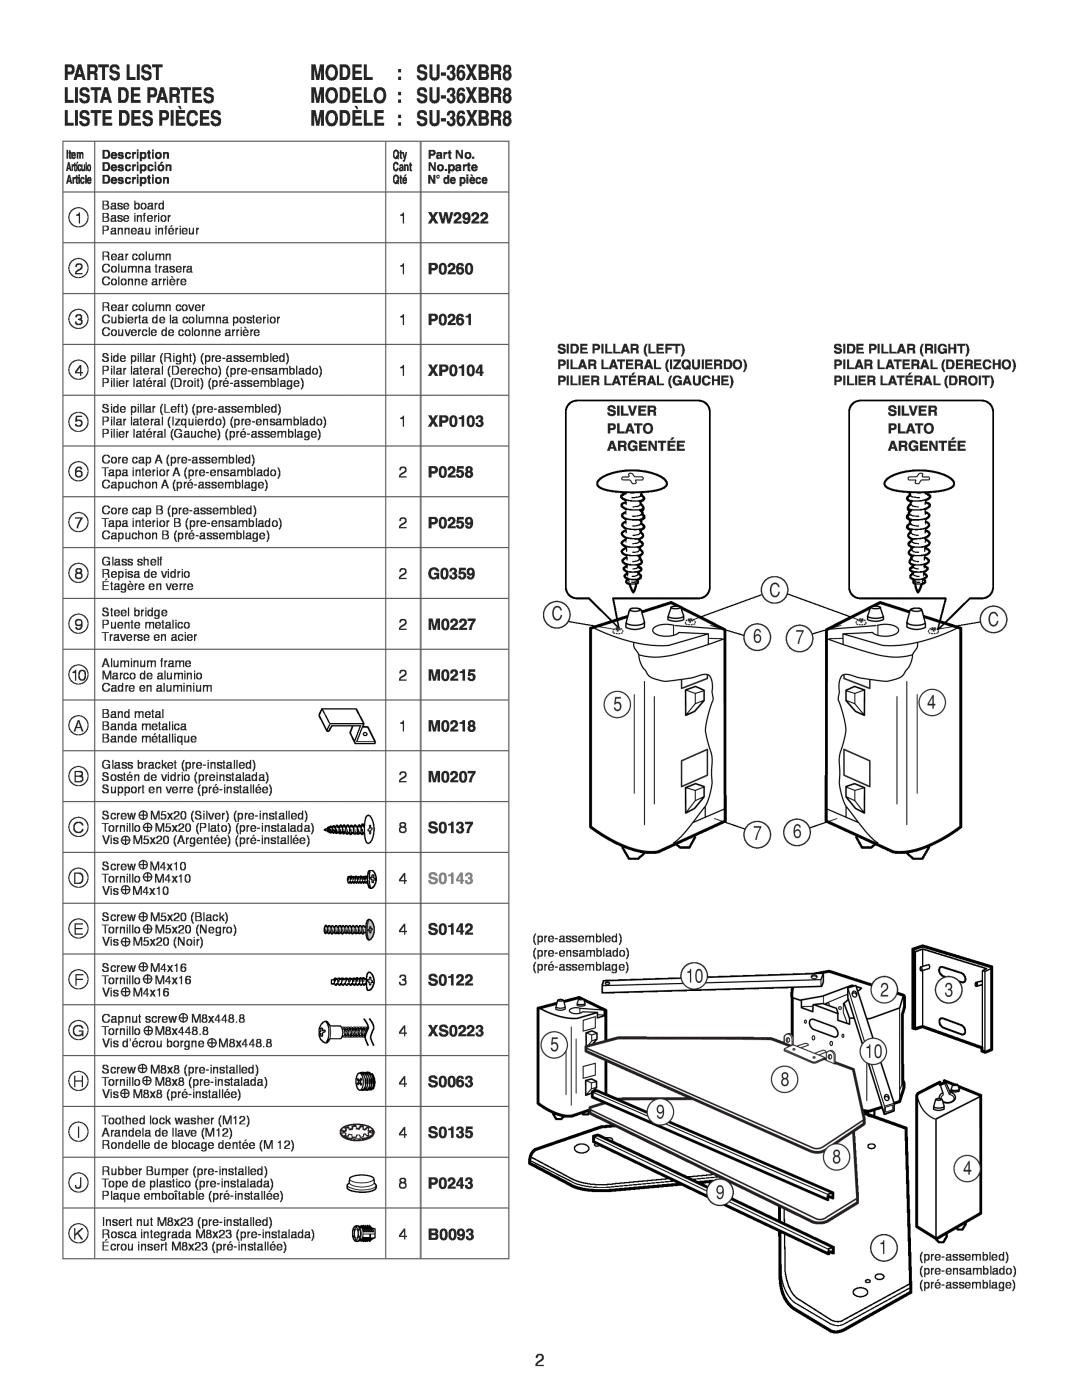 Sony SU-36XBR8 manual Parts List, Lista De Partes, Liste Des Pièces, Model 